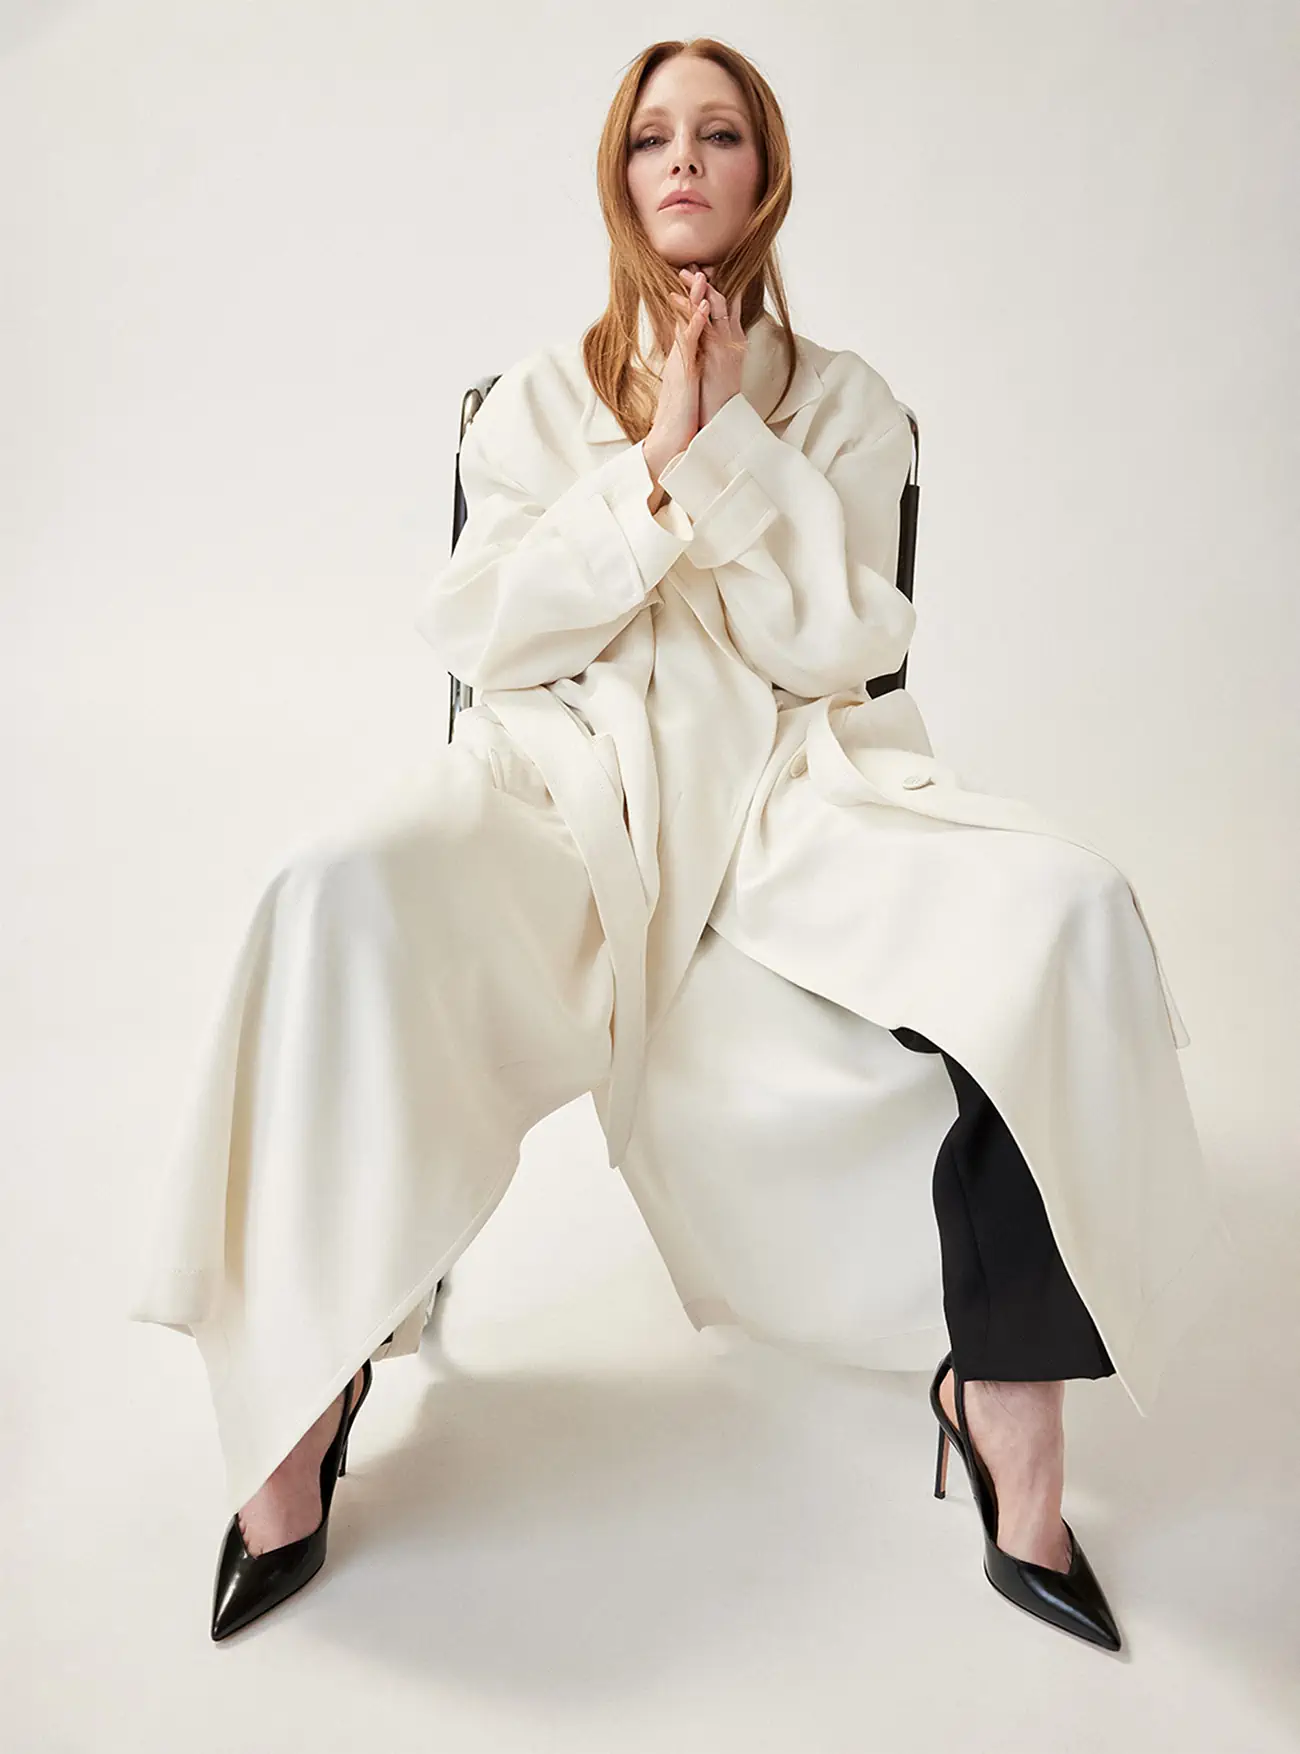 Julianne Moore covers Harper’s Bazaar UK February 2024 by David Roemer